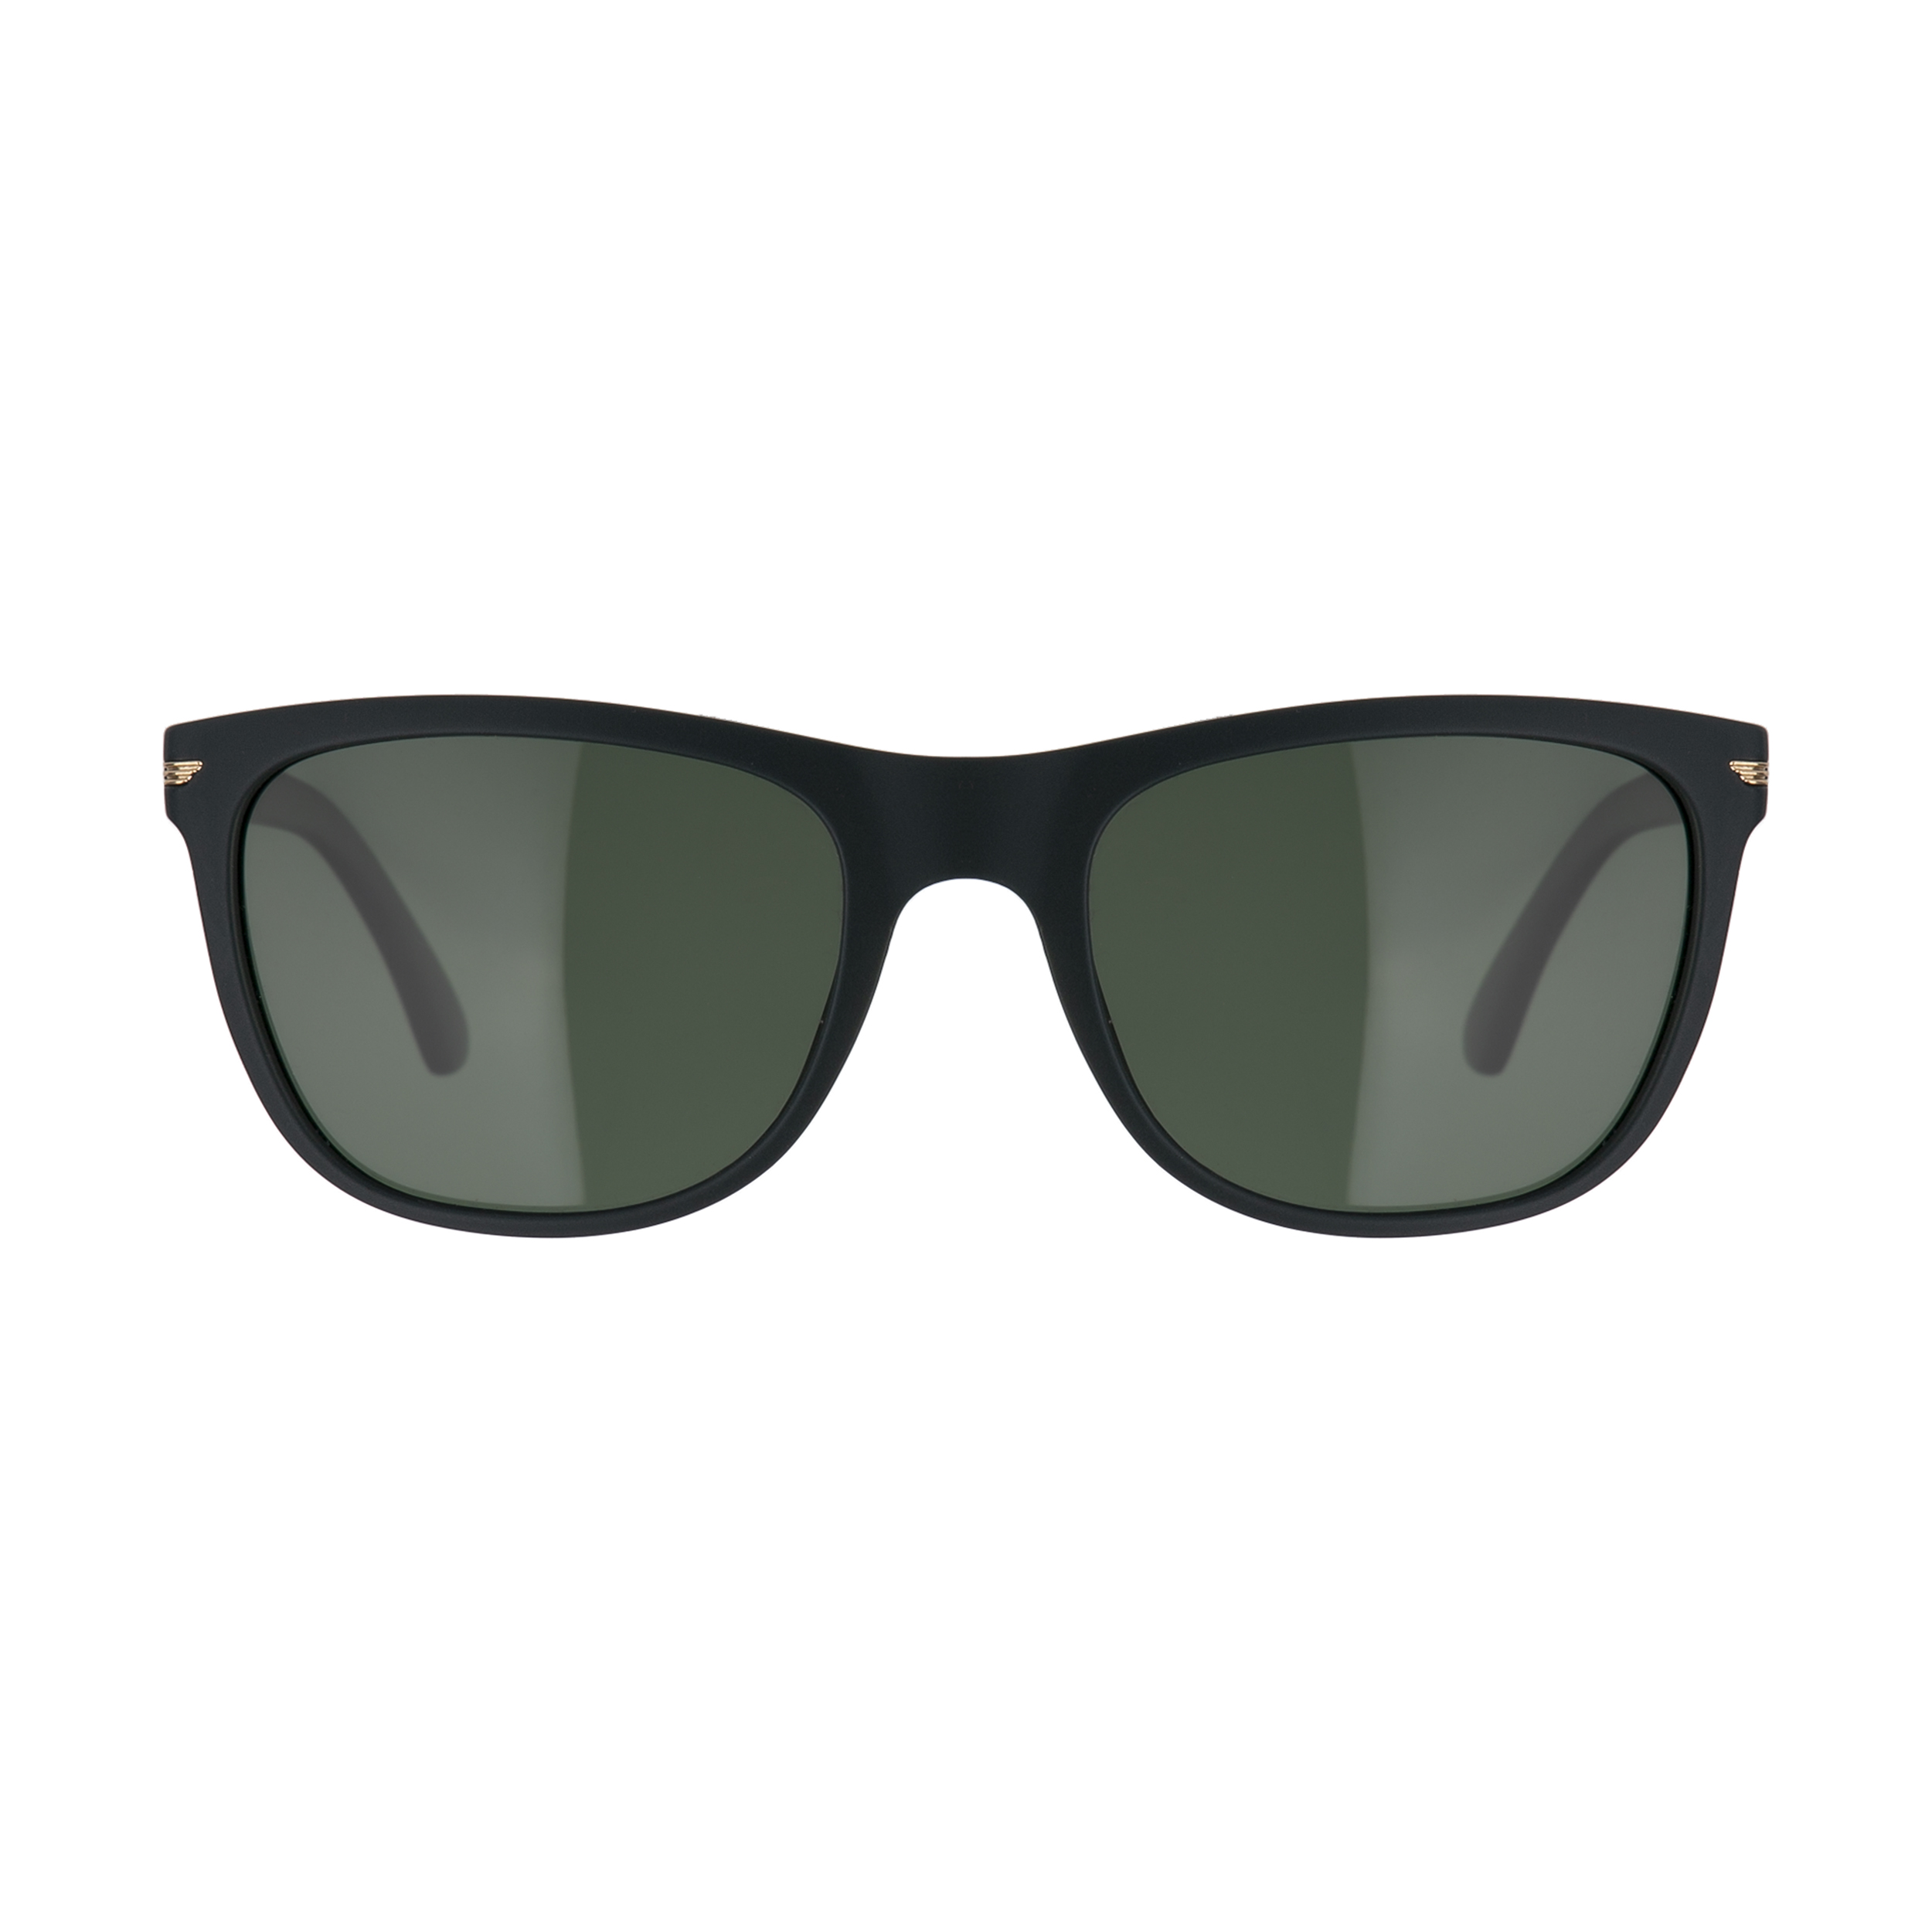 عینک آفتابی اسپیریت مدل p00015 c5